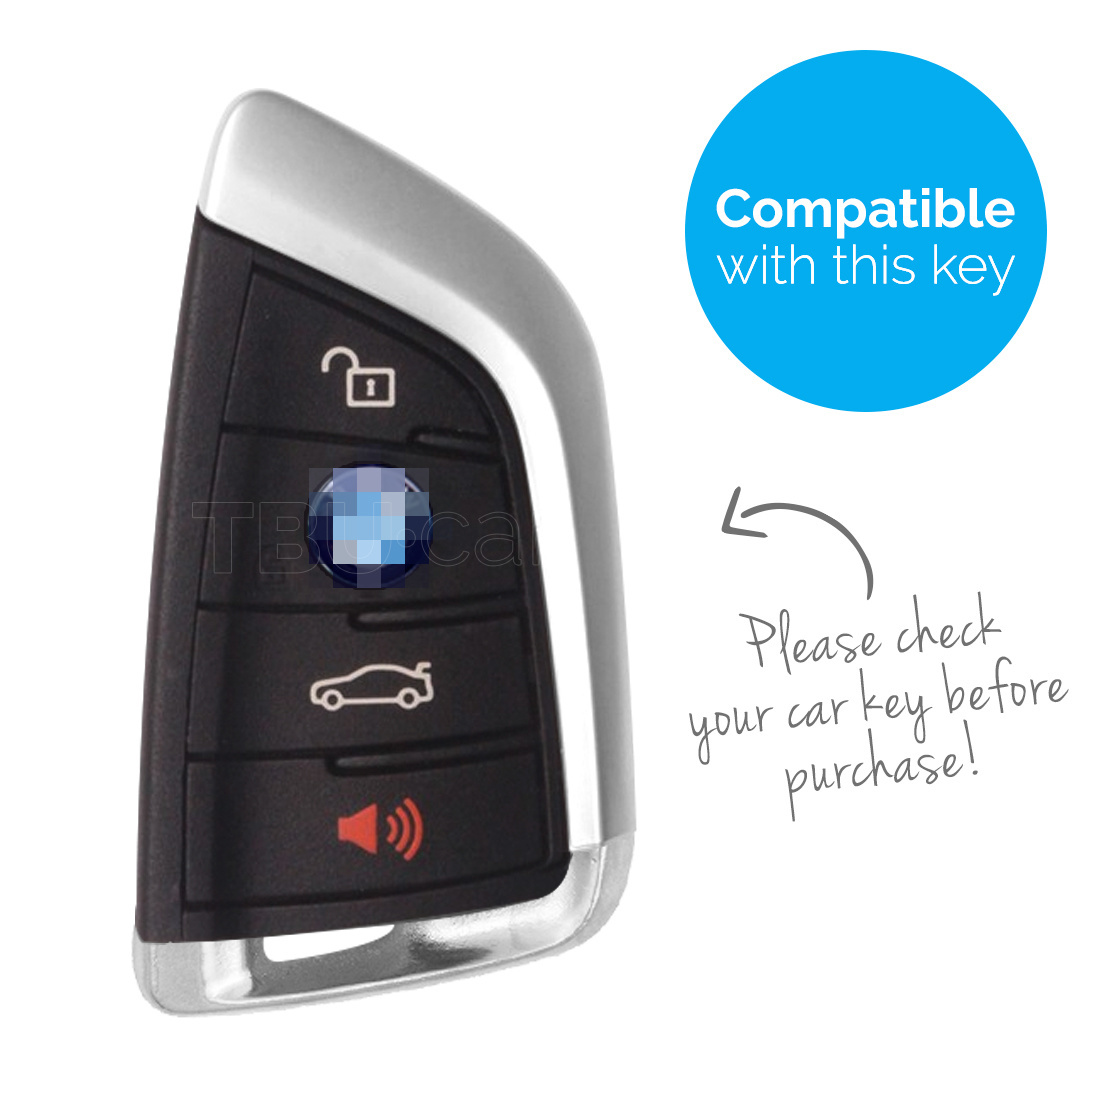 TBU car Autoschlüssel Hülle kompatibel mit BMW 4 Tasten (Keyless Entry) -  Schutzhülle aus Silikon - Auto Schlüsselhülle Cover in Rott